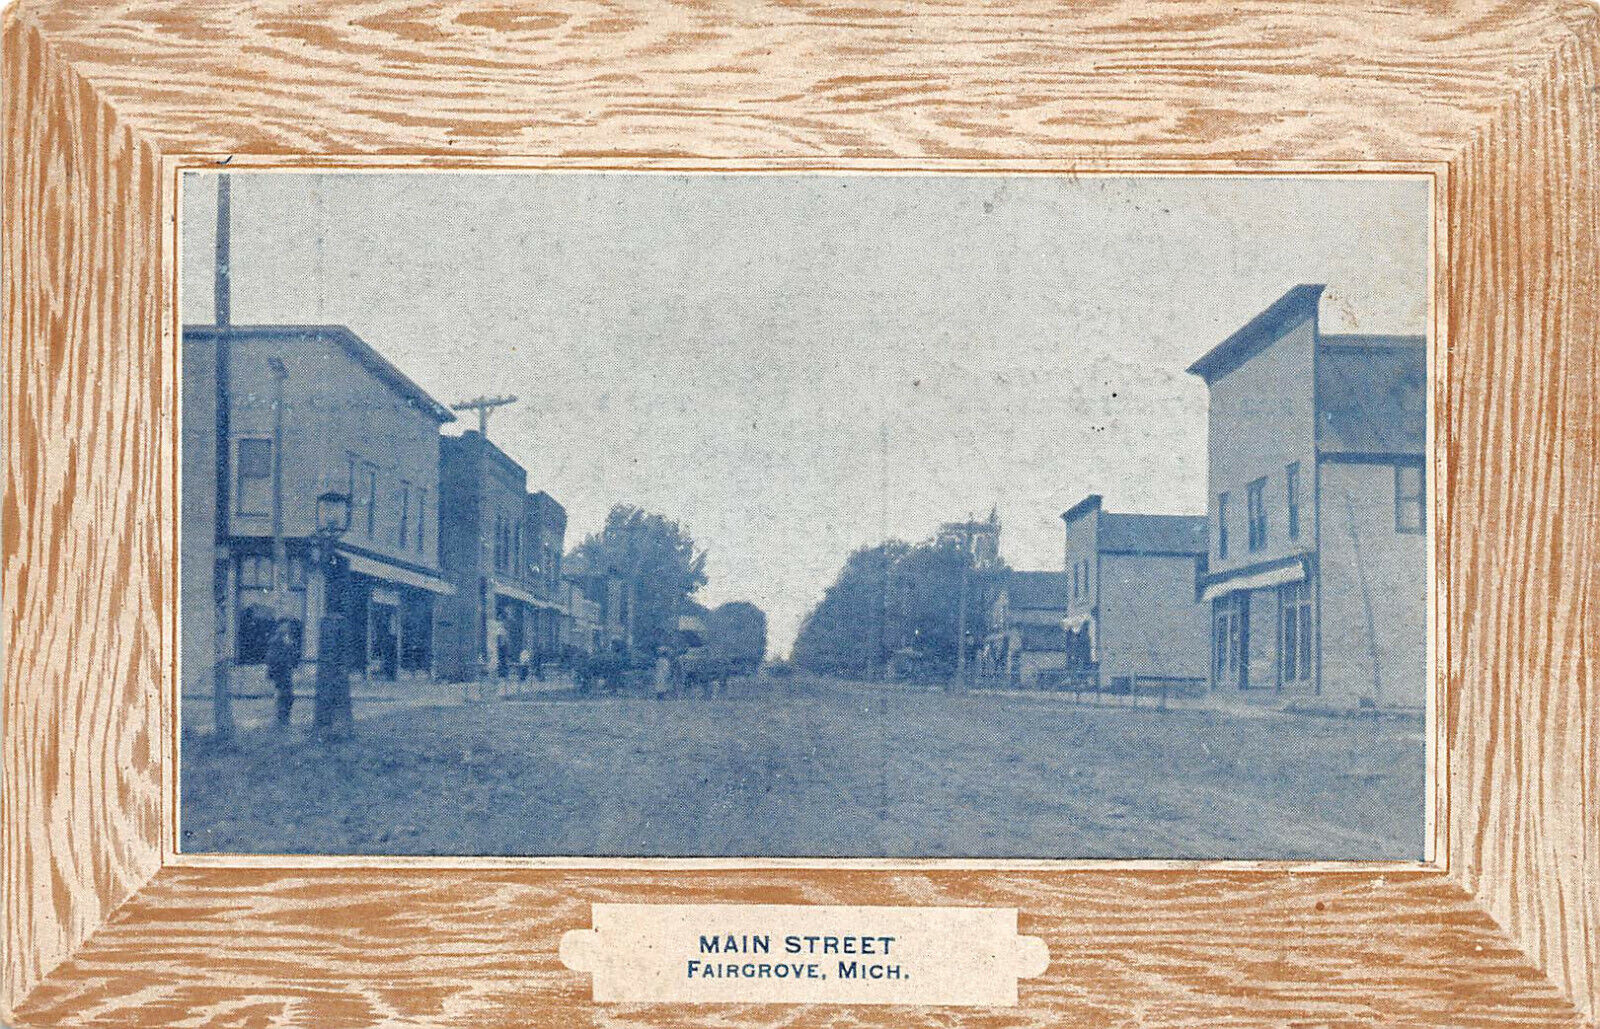 MAIN STREET FAIRGROVE, MICHIGAN VINTAGE 1909 POSTCARD